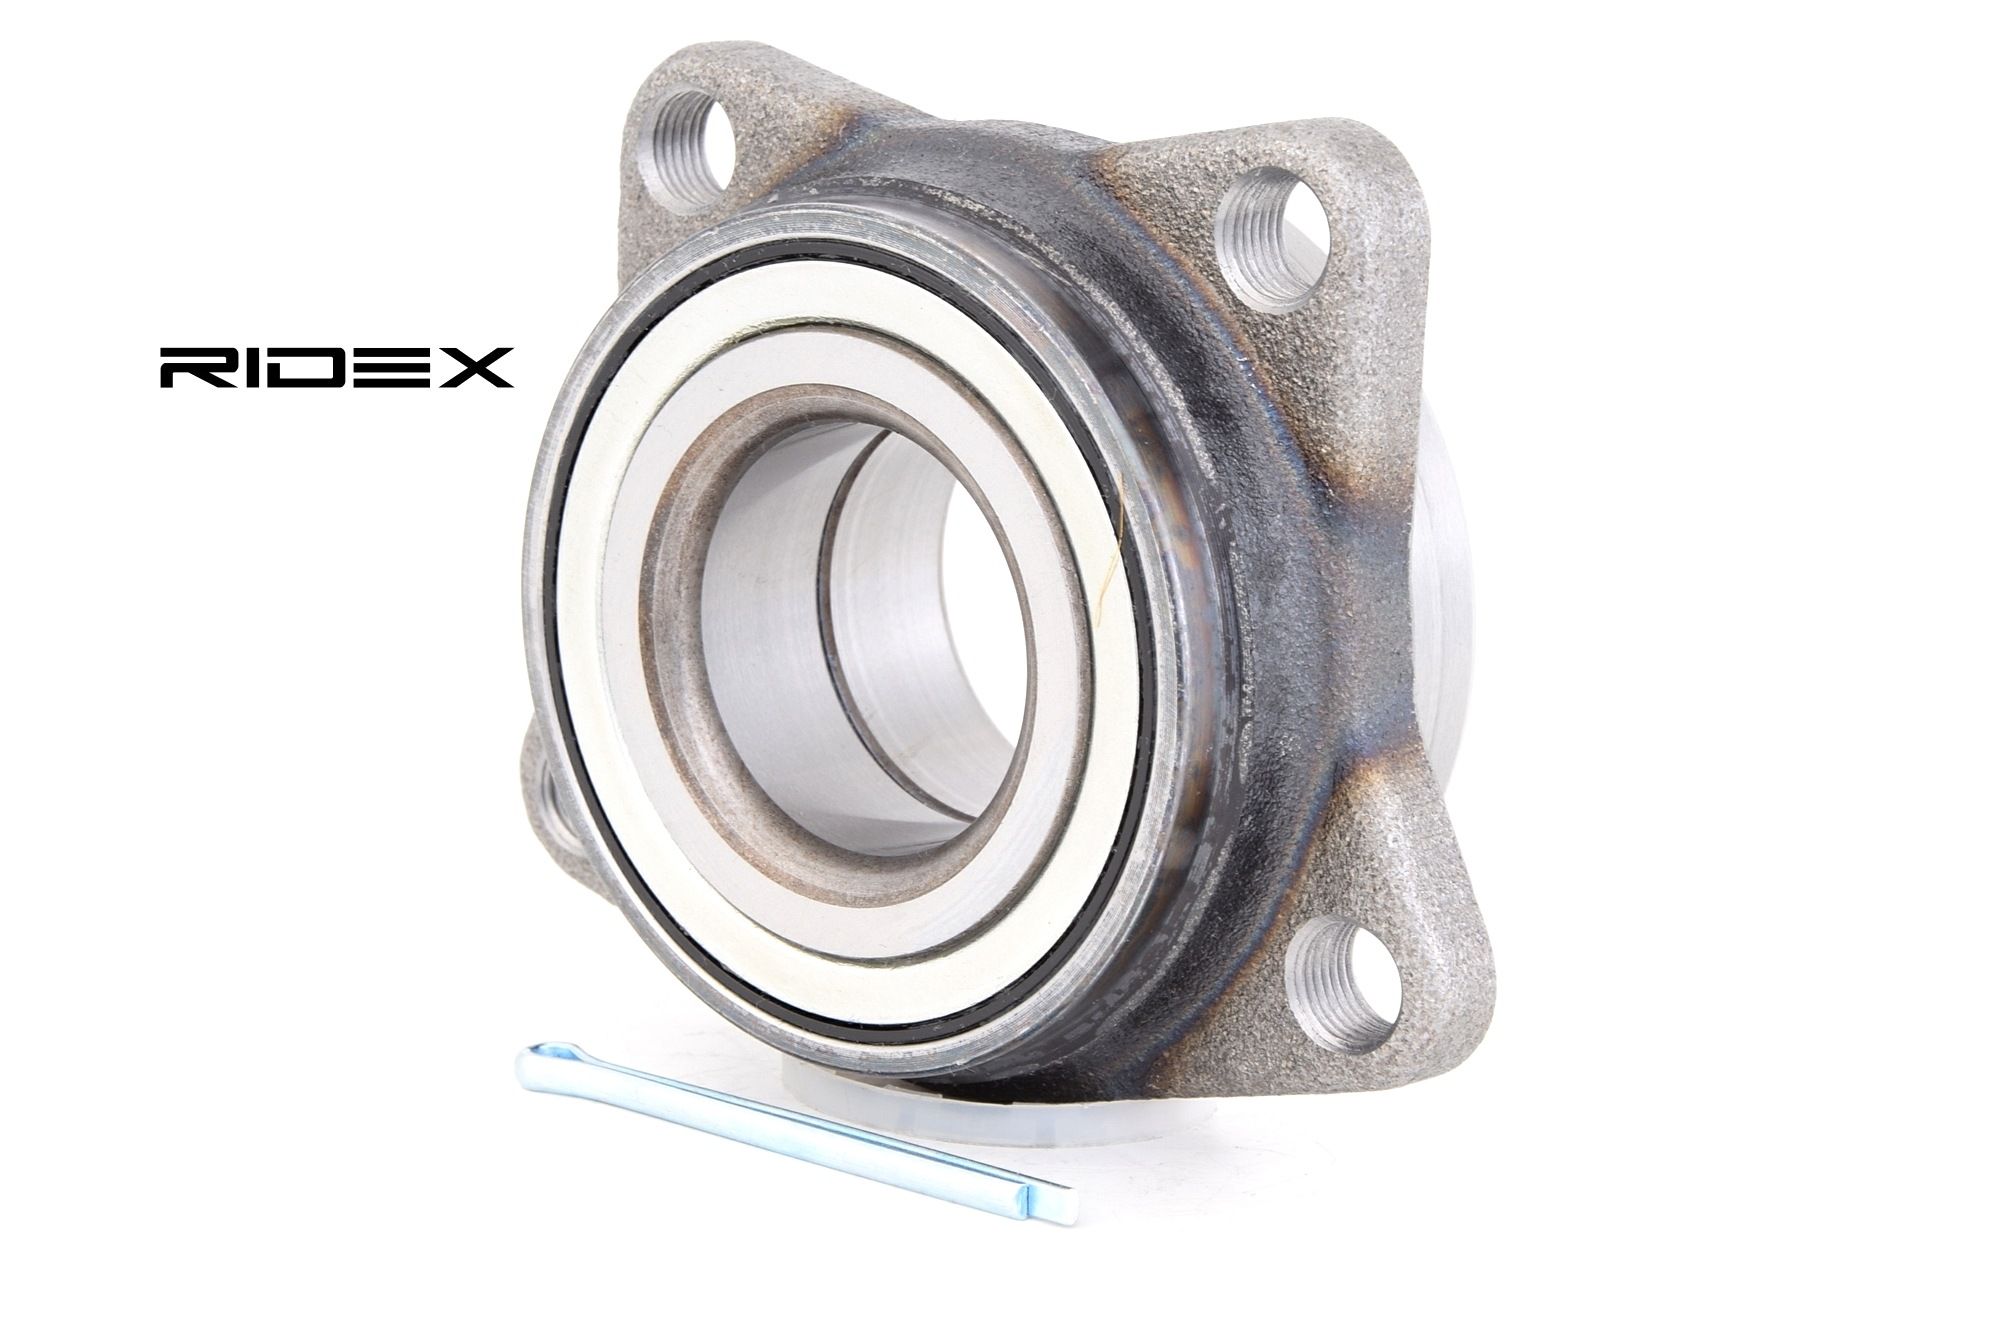 RIDEX 654W0254 Wheel bearing kit Front Axle, 84 mm